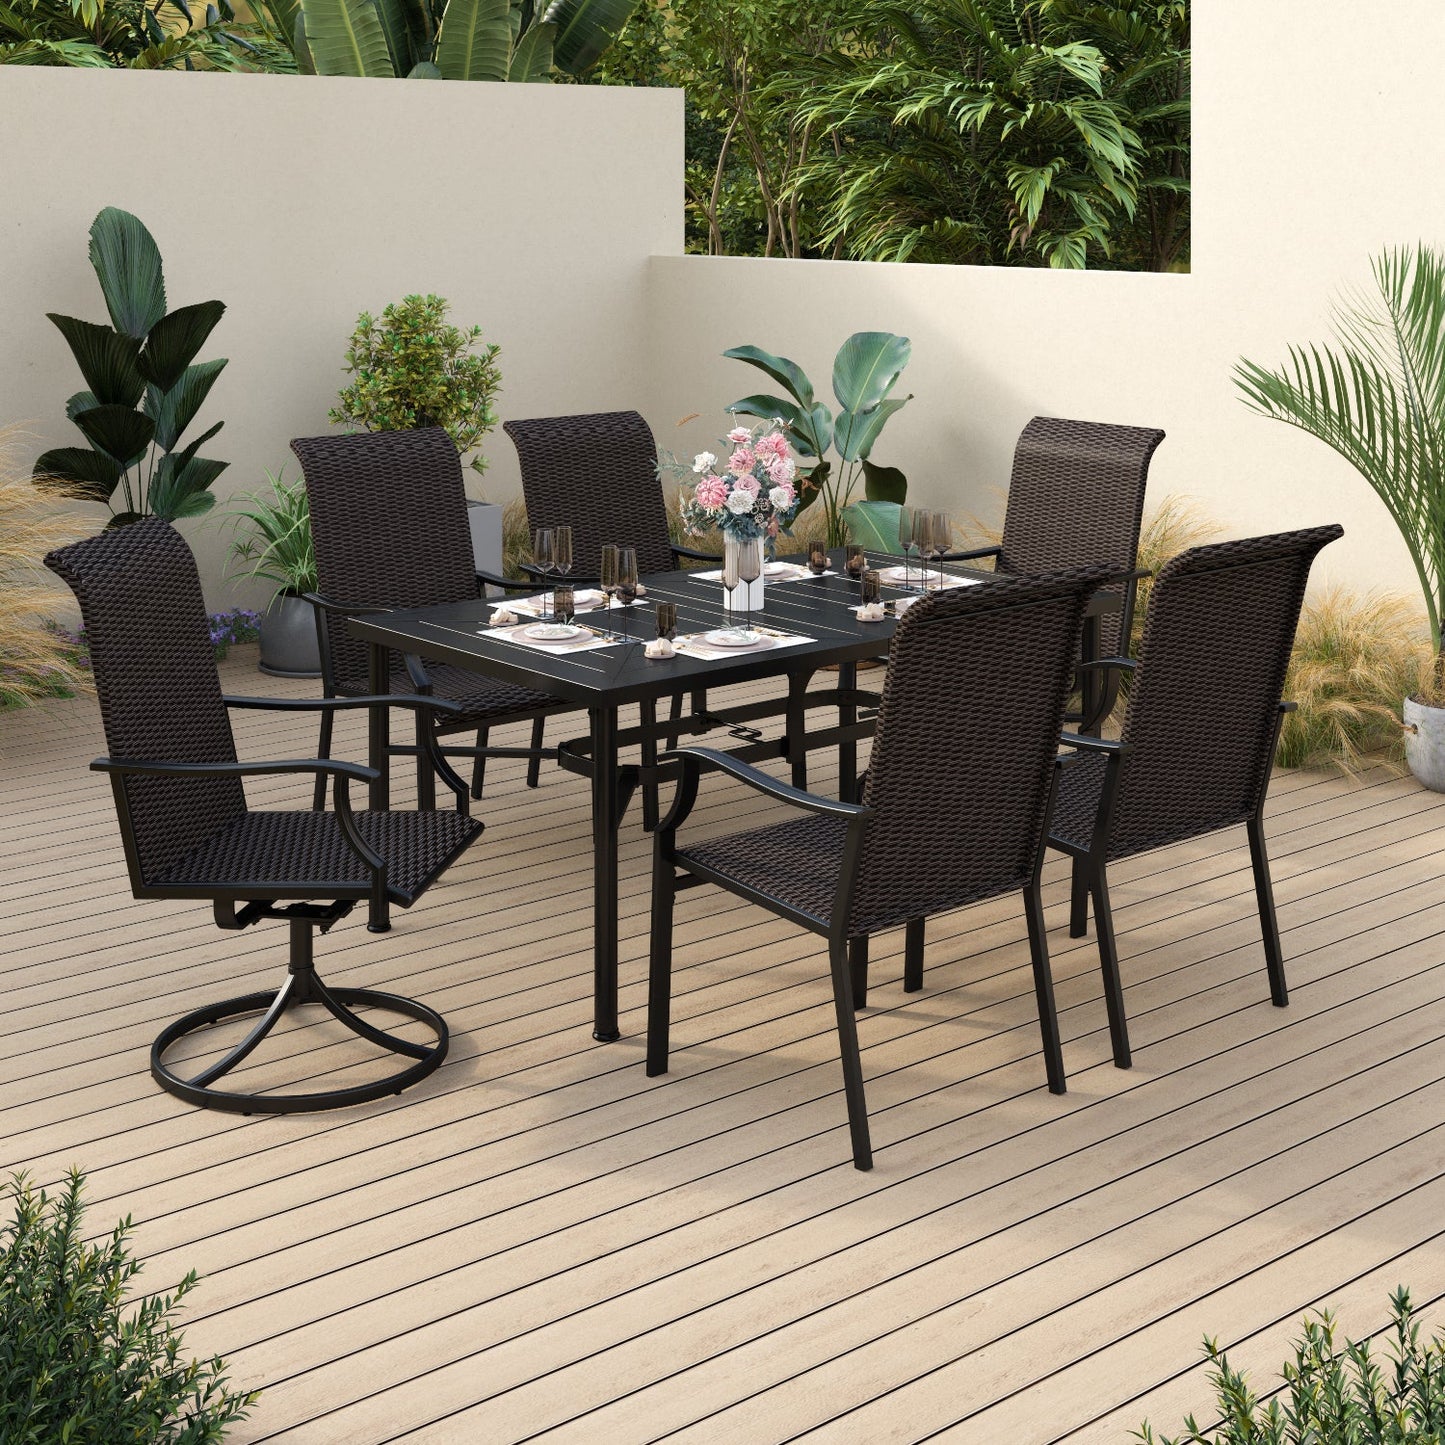 Sophia & William 7 Piece Outdoor Patio Dining Set Outdoor Furniture Set with 1 Steel Retangular Table & 6 Rattan Chairs